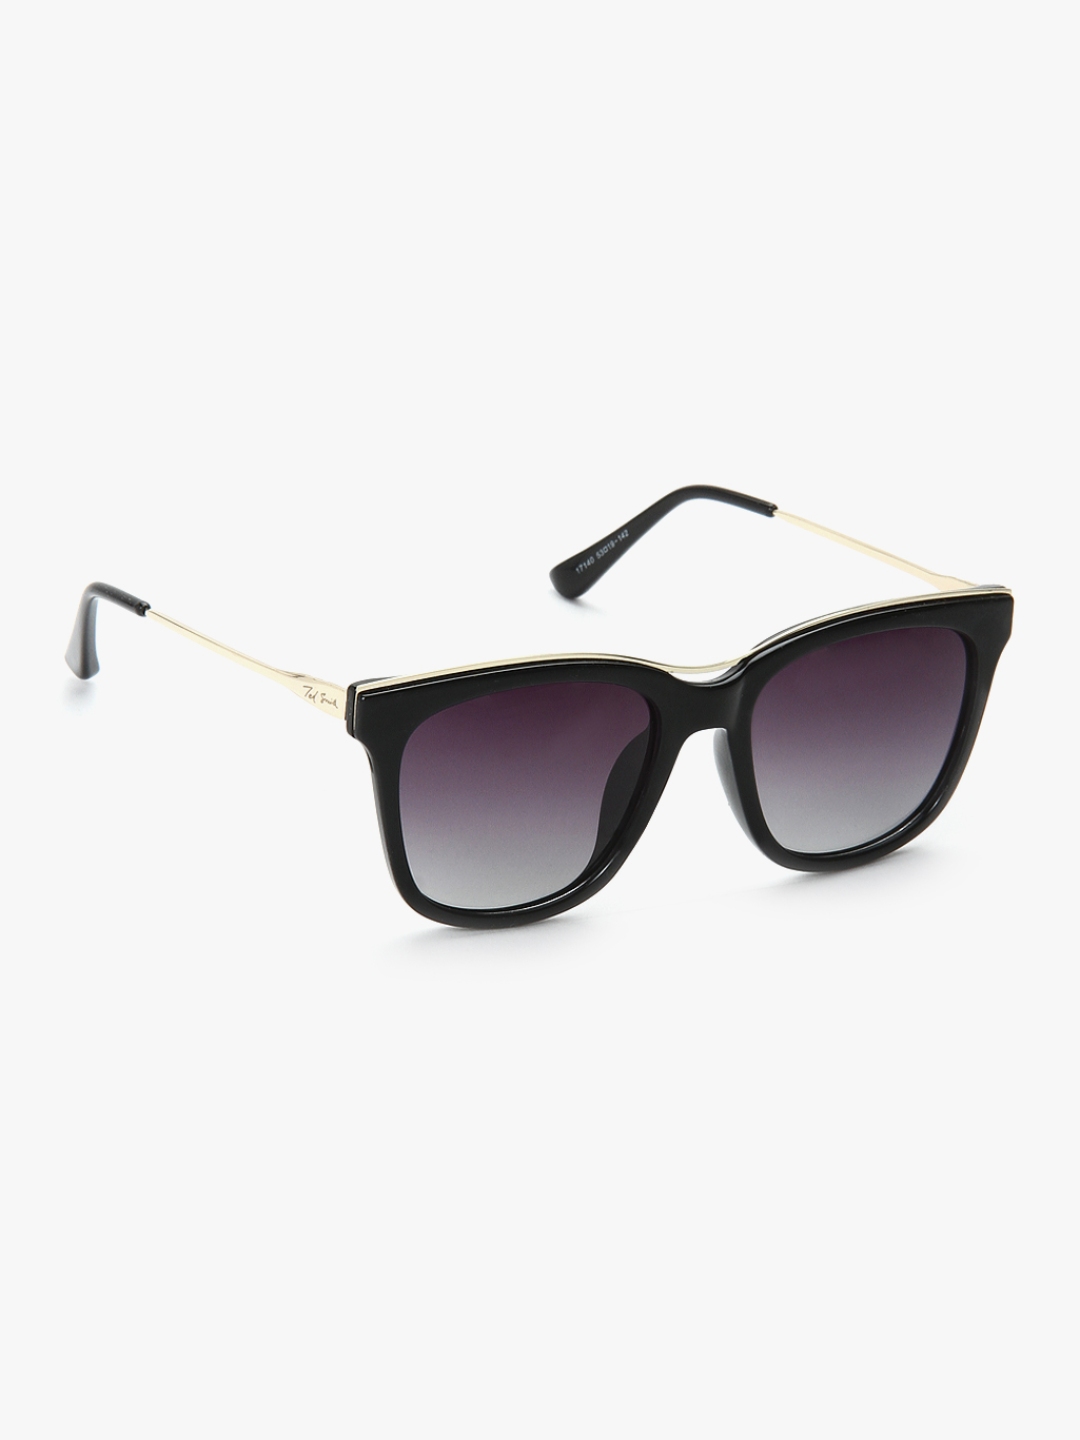 cateye sunglasses online